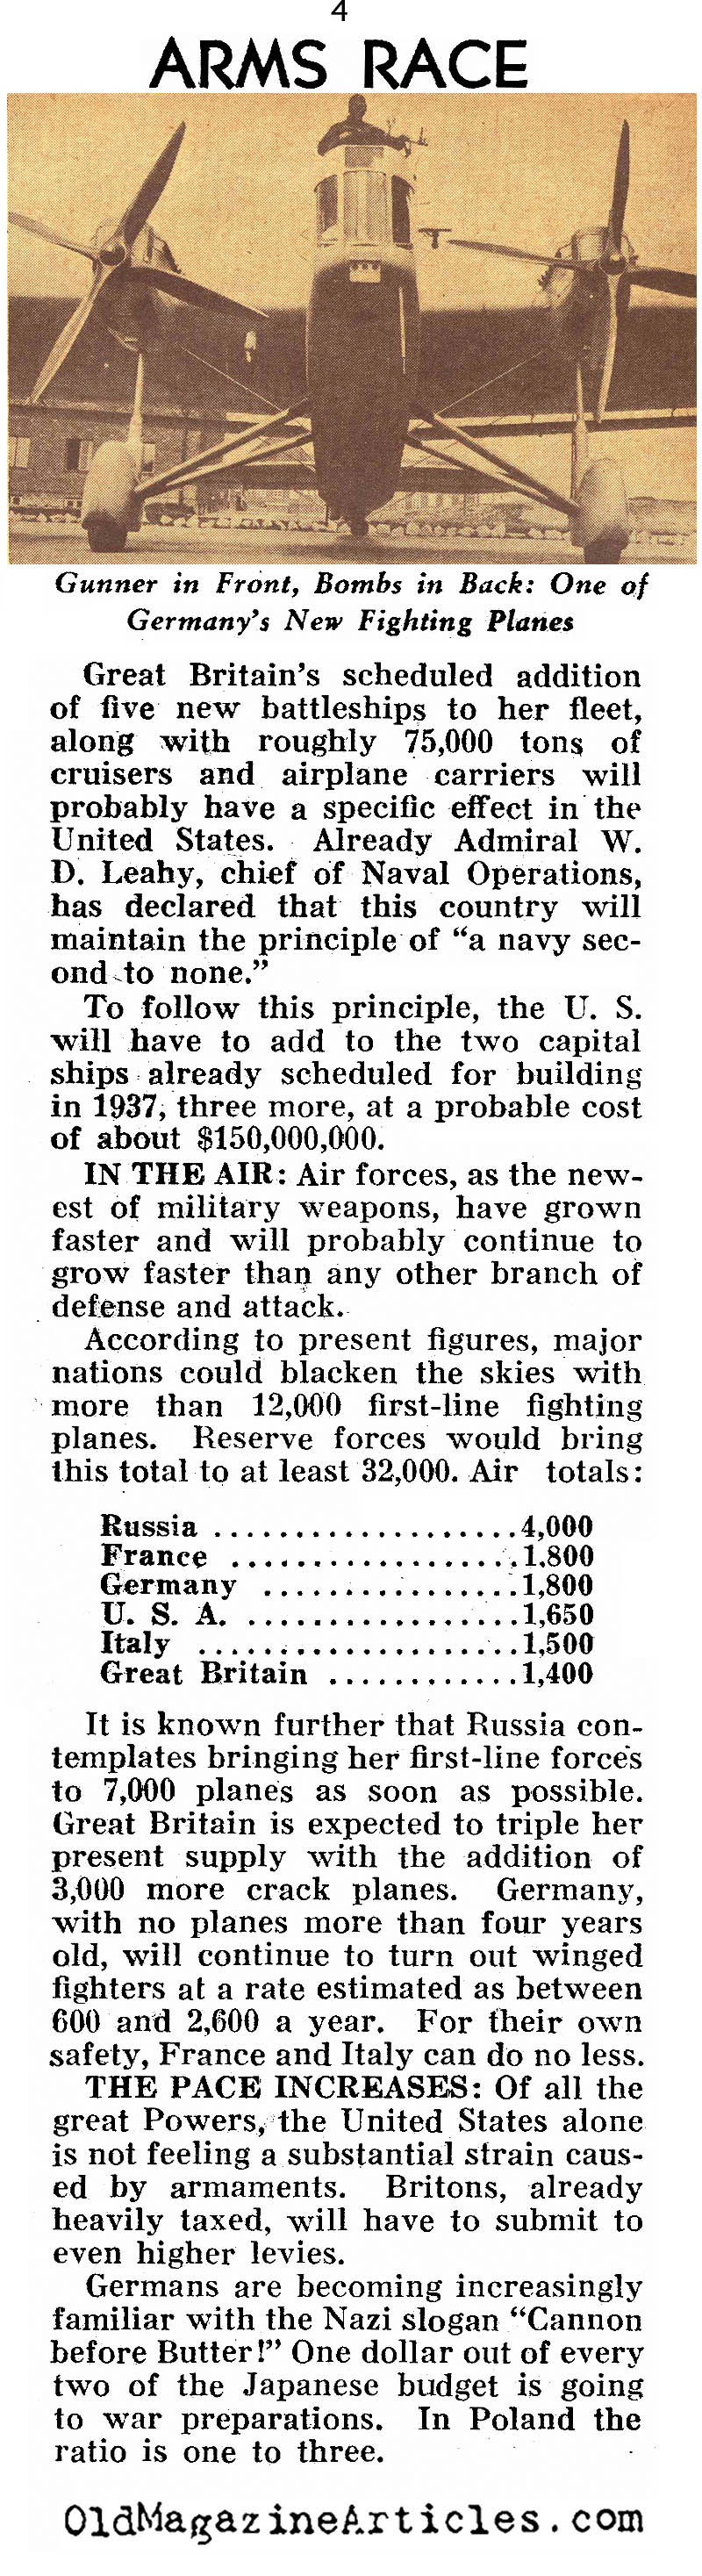 The Arms Race (Pathfinder Magazine, 1937)